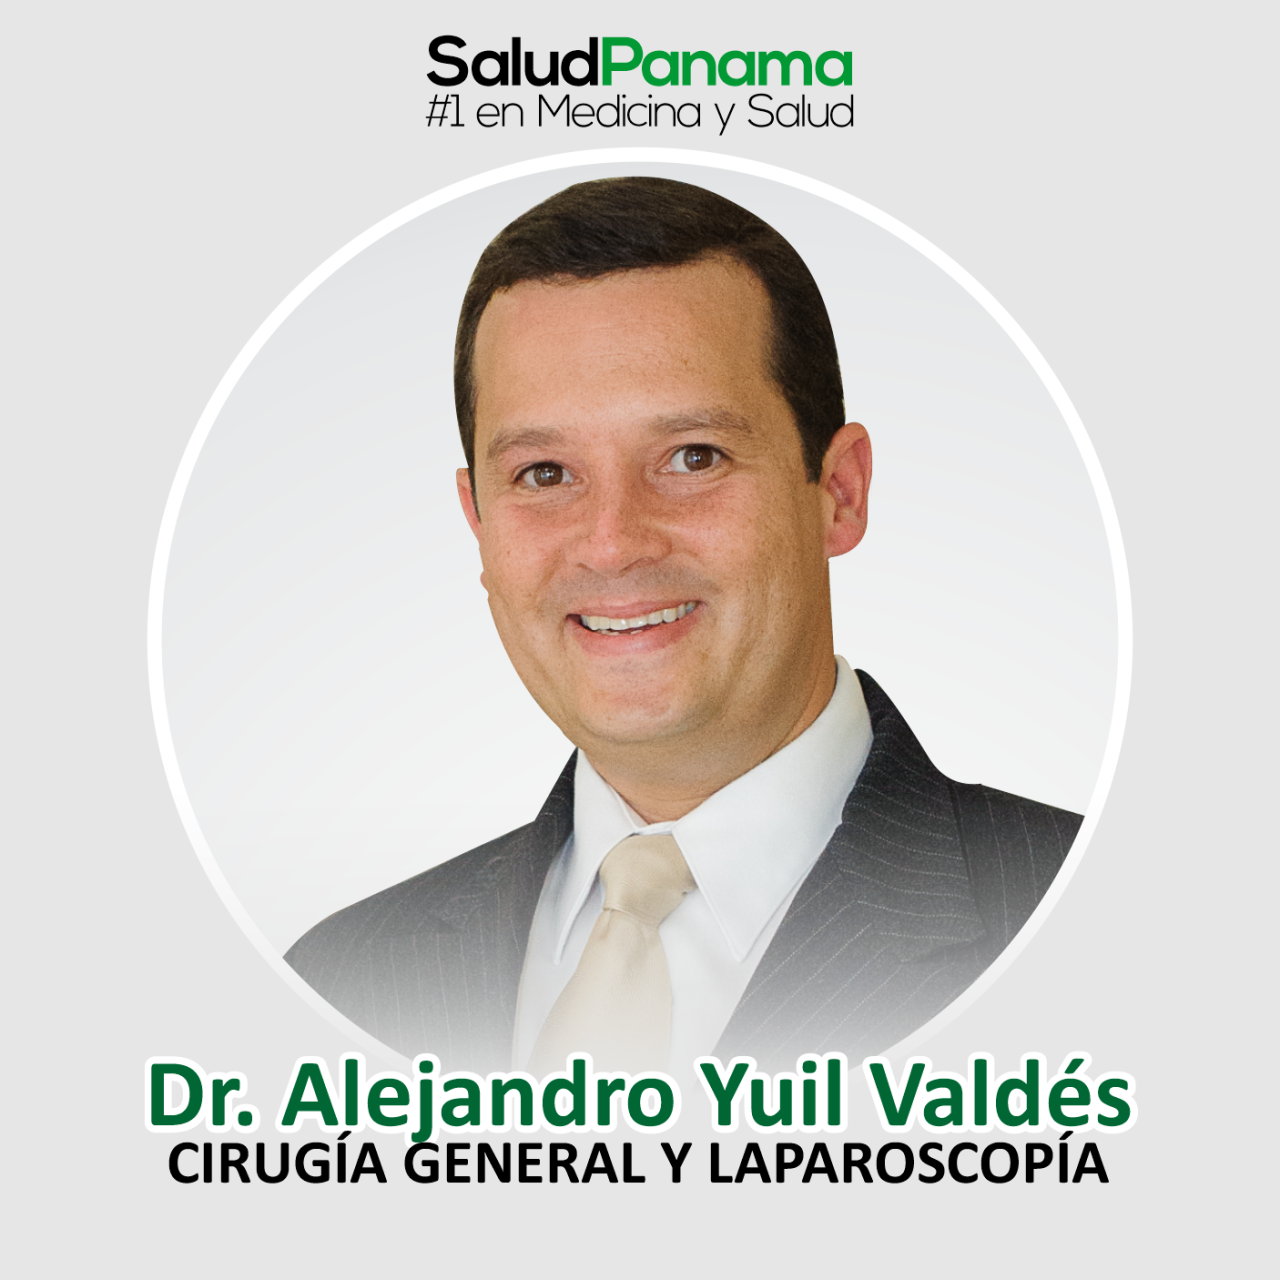 Dr. Alejandro Yuil Valdes